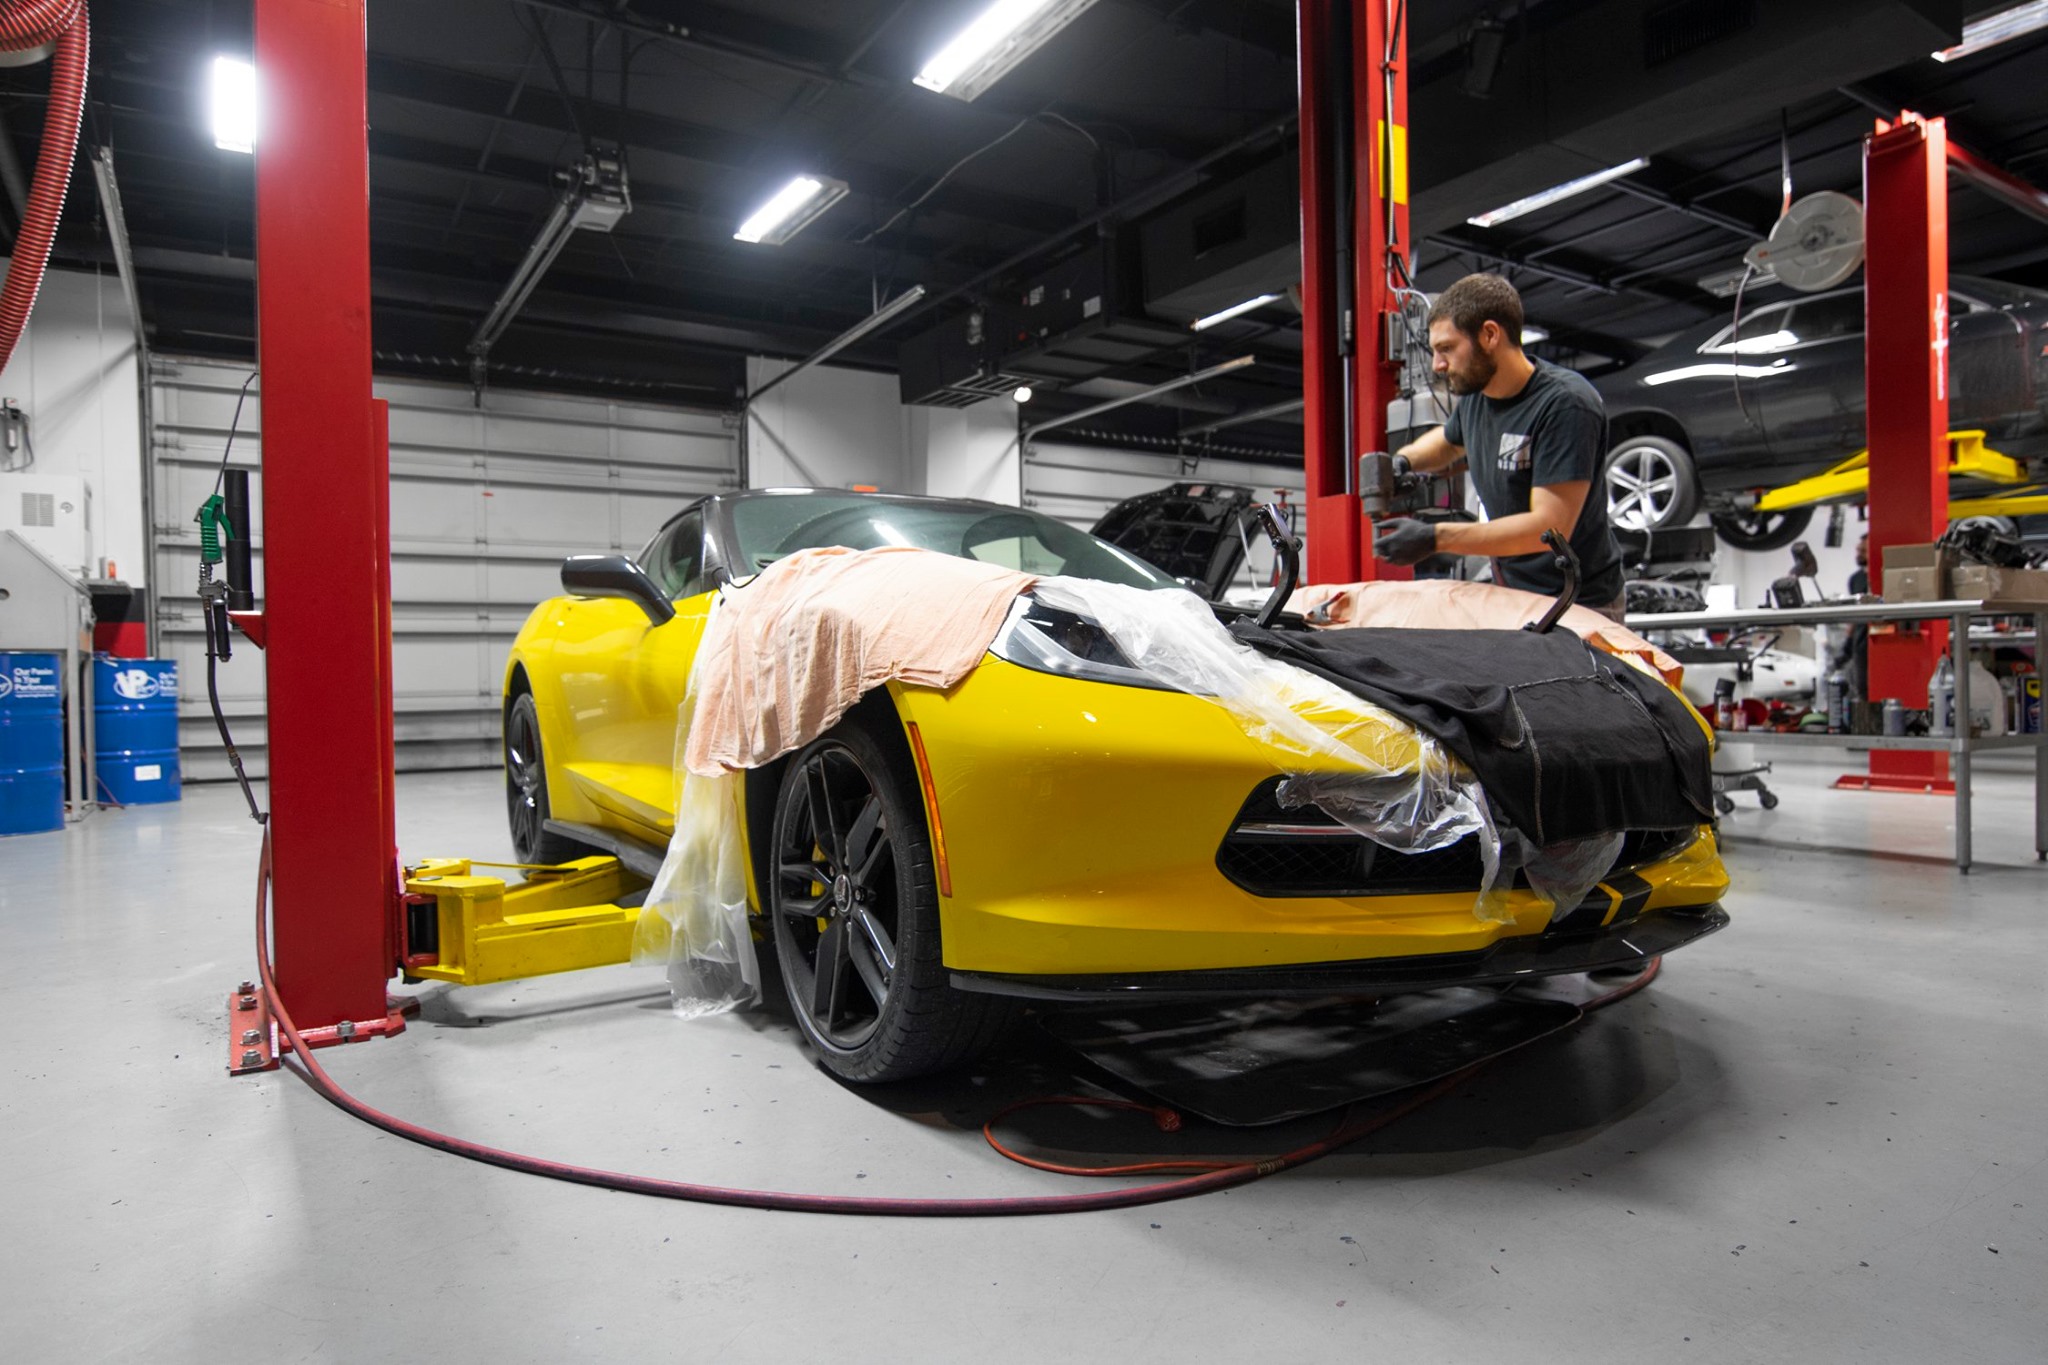 2016 Chevrolet Corvette in a workshop